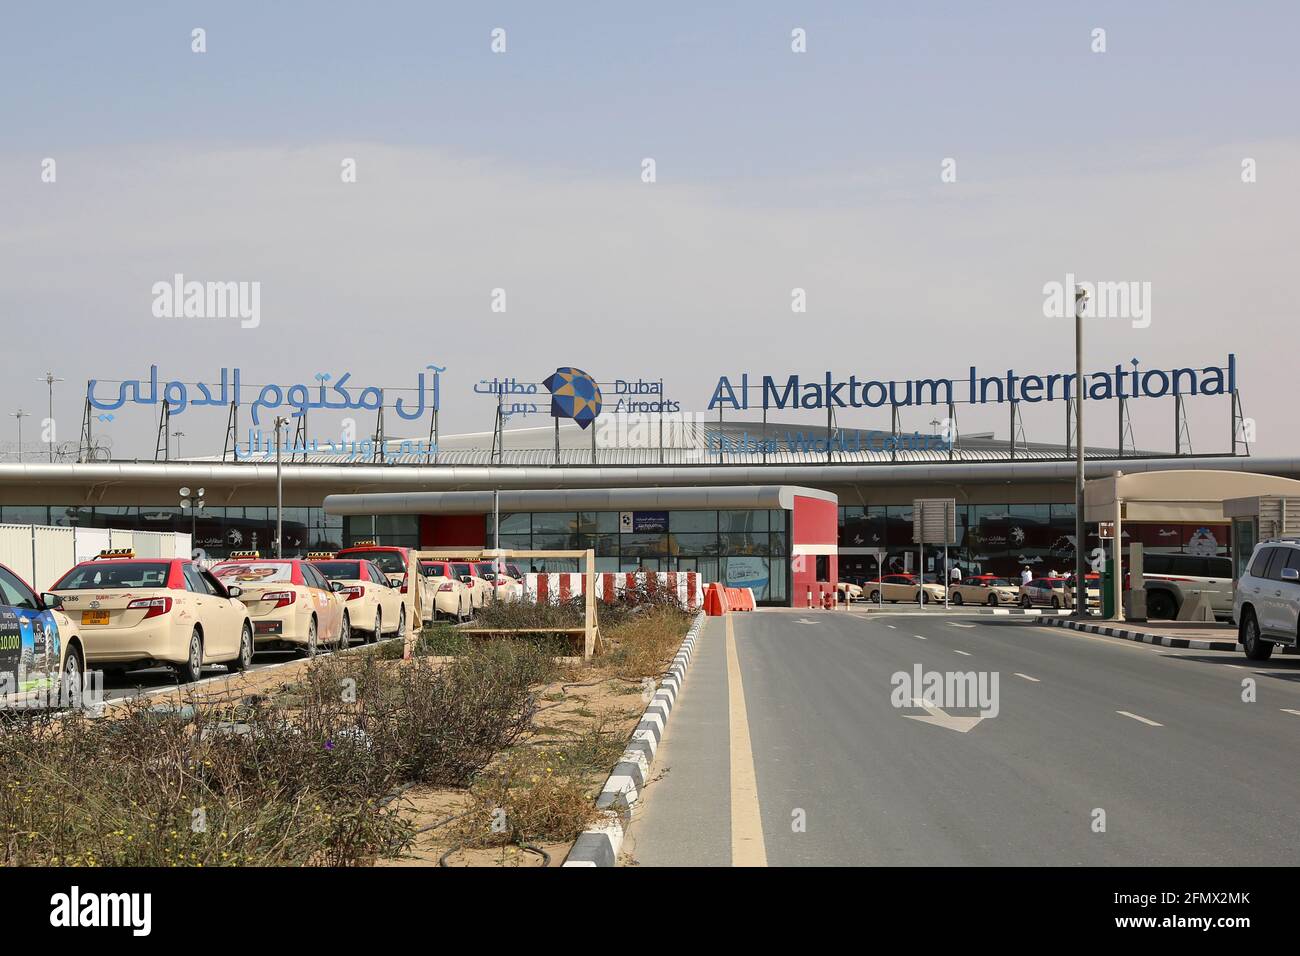 Dubai, Emirati Arabi Uniti - 5. Marzo 2017: Dubai World Central al Maktoum International Airport (DWC) negli Emirati Arabi Uniti. Foto Stock